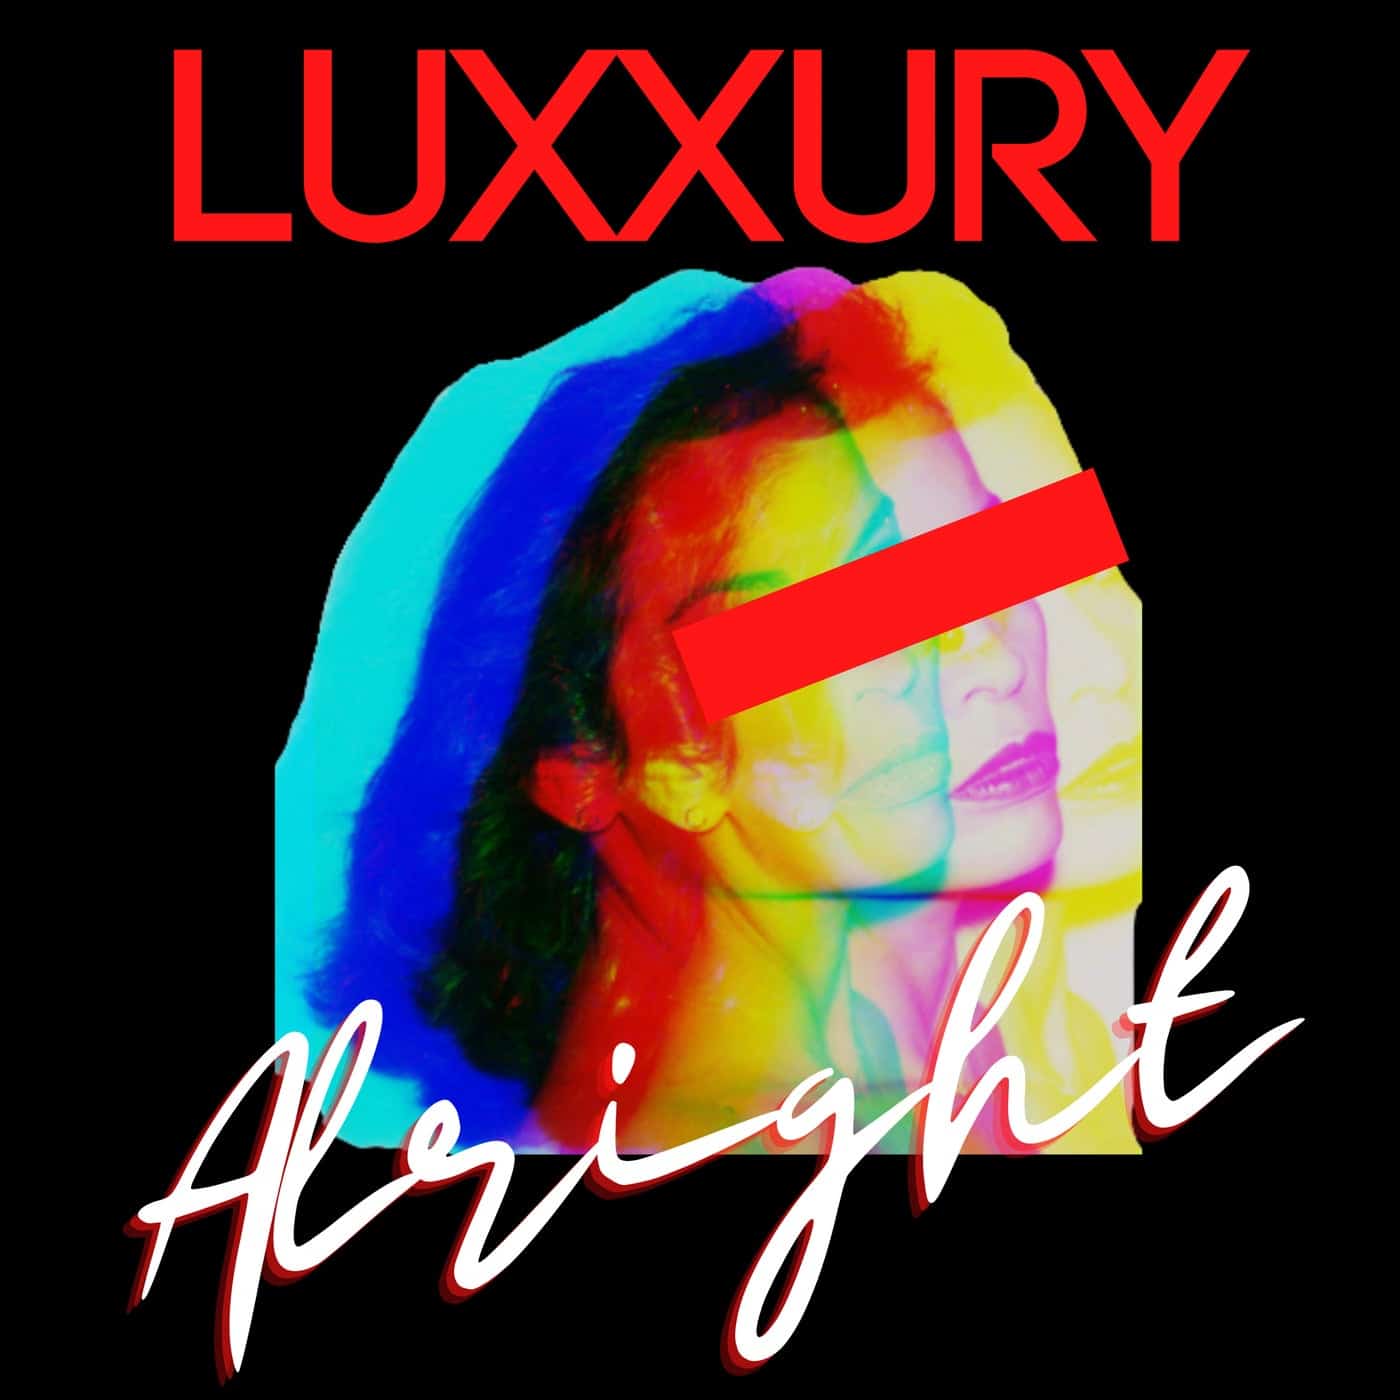 Download Luxxury - Alright on Electrobuzz